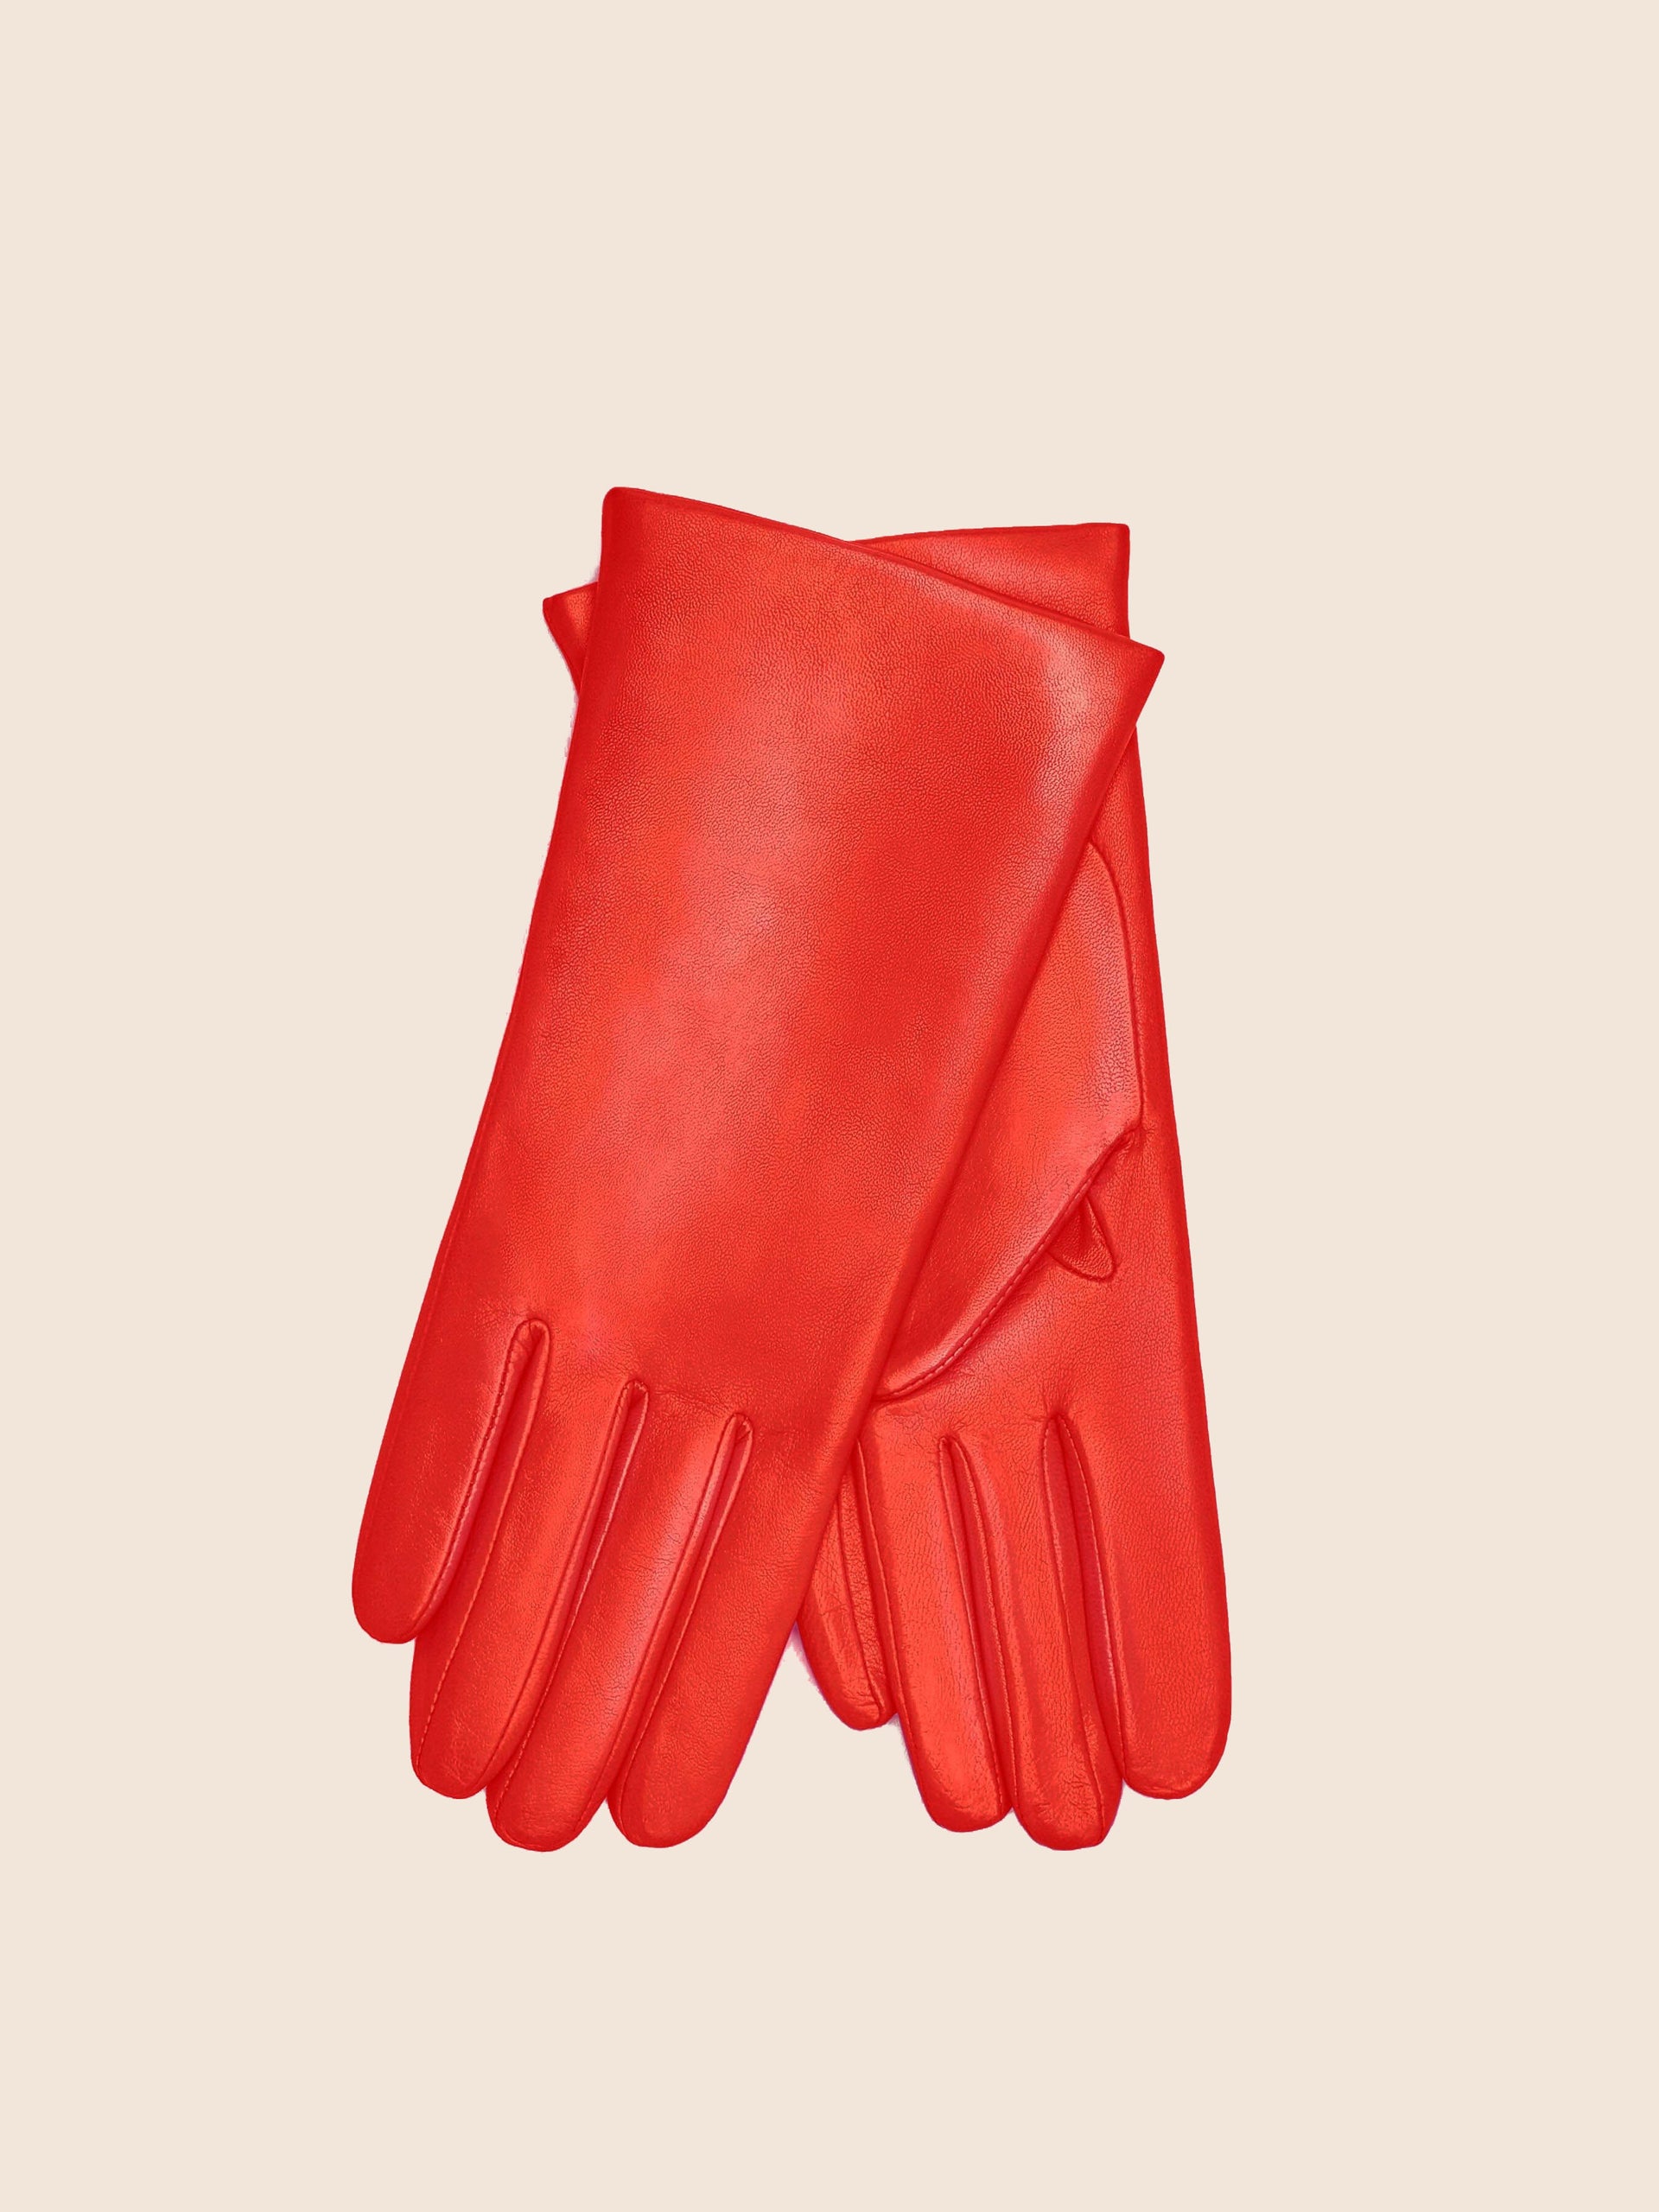 Second Hand Alpi Oxblood Gloves